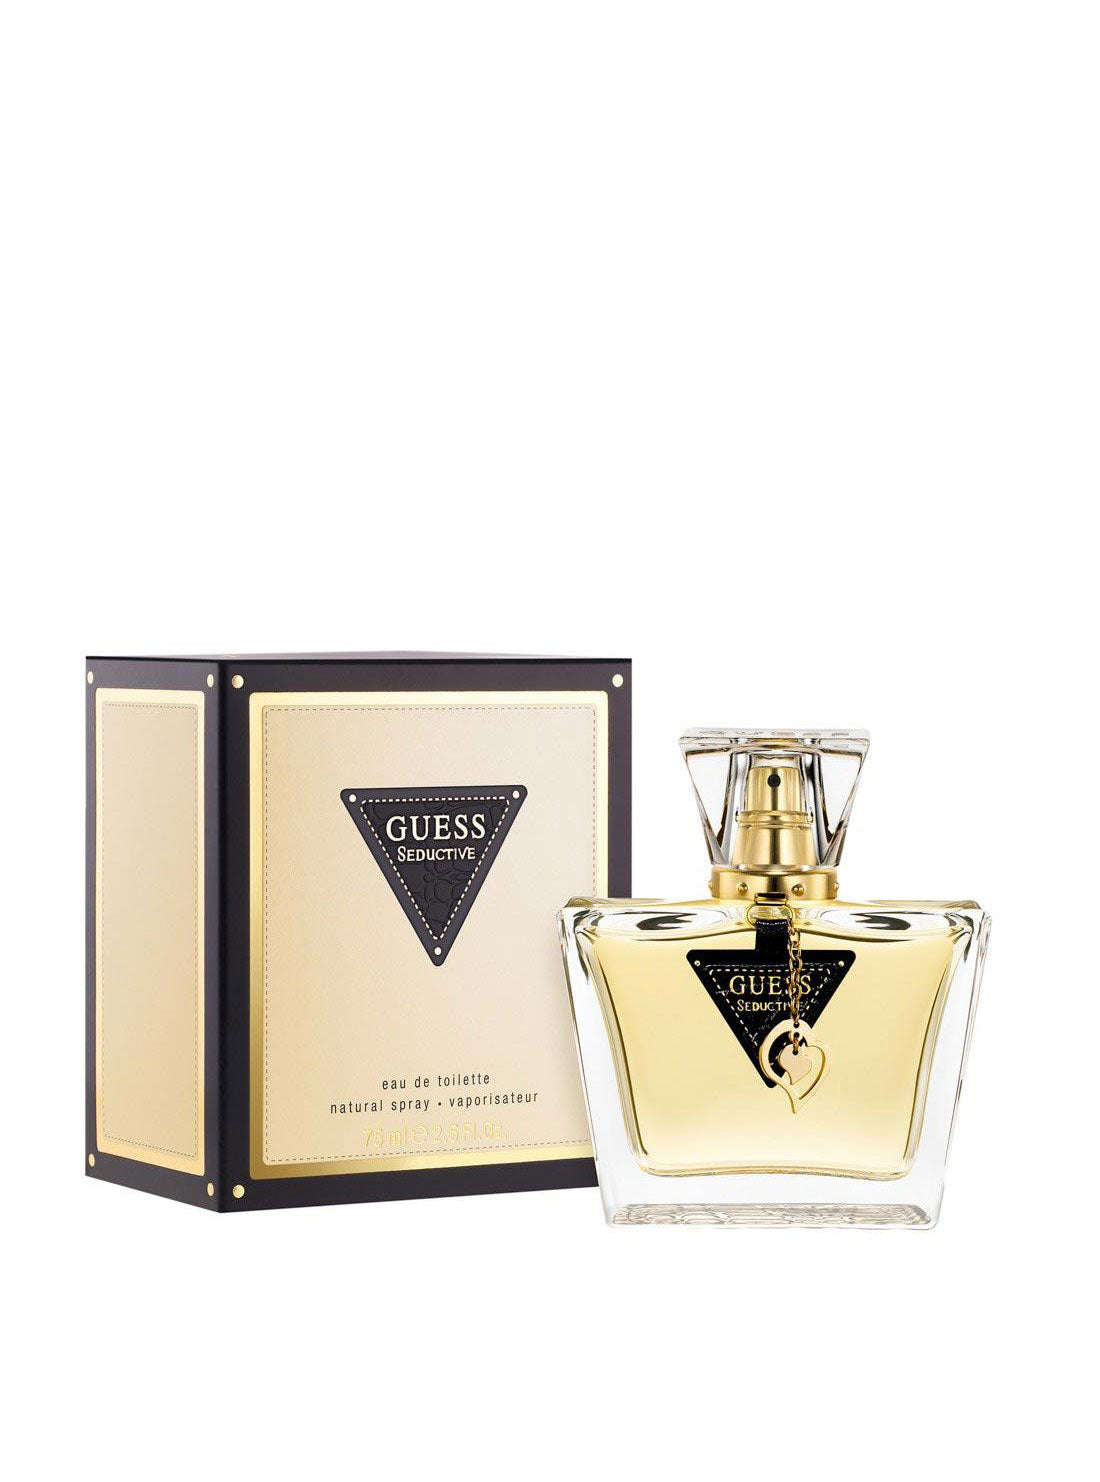 Seductive Perfume For Women Eau De Toilette 75ml, Free Shipping Over $75